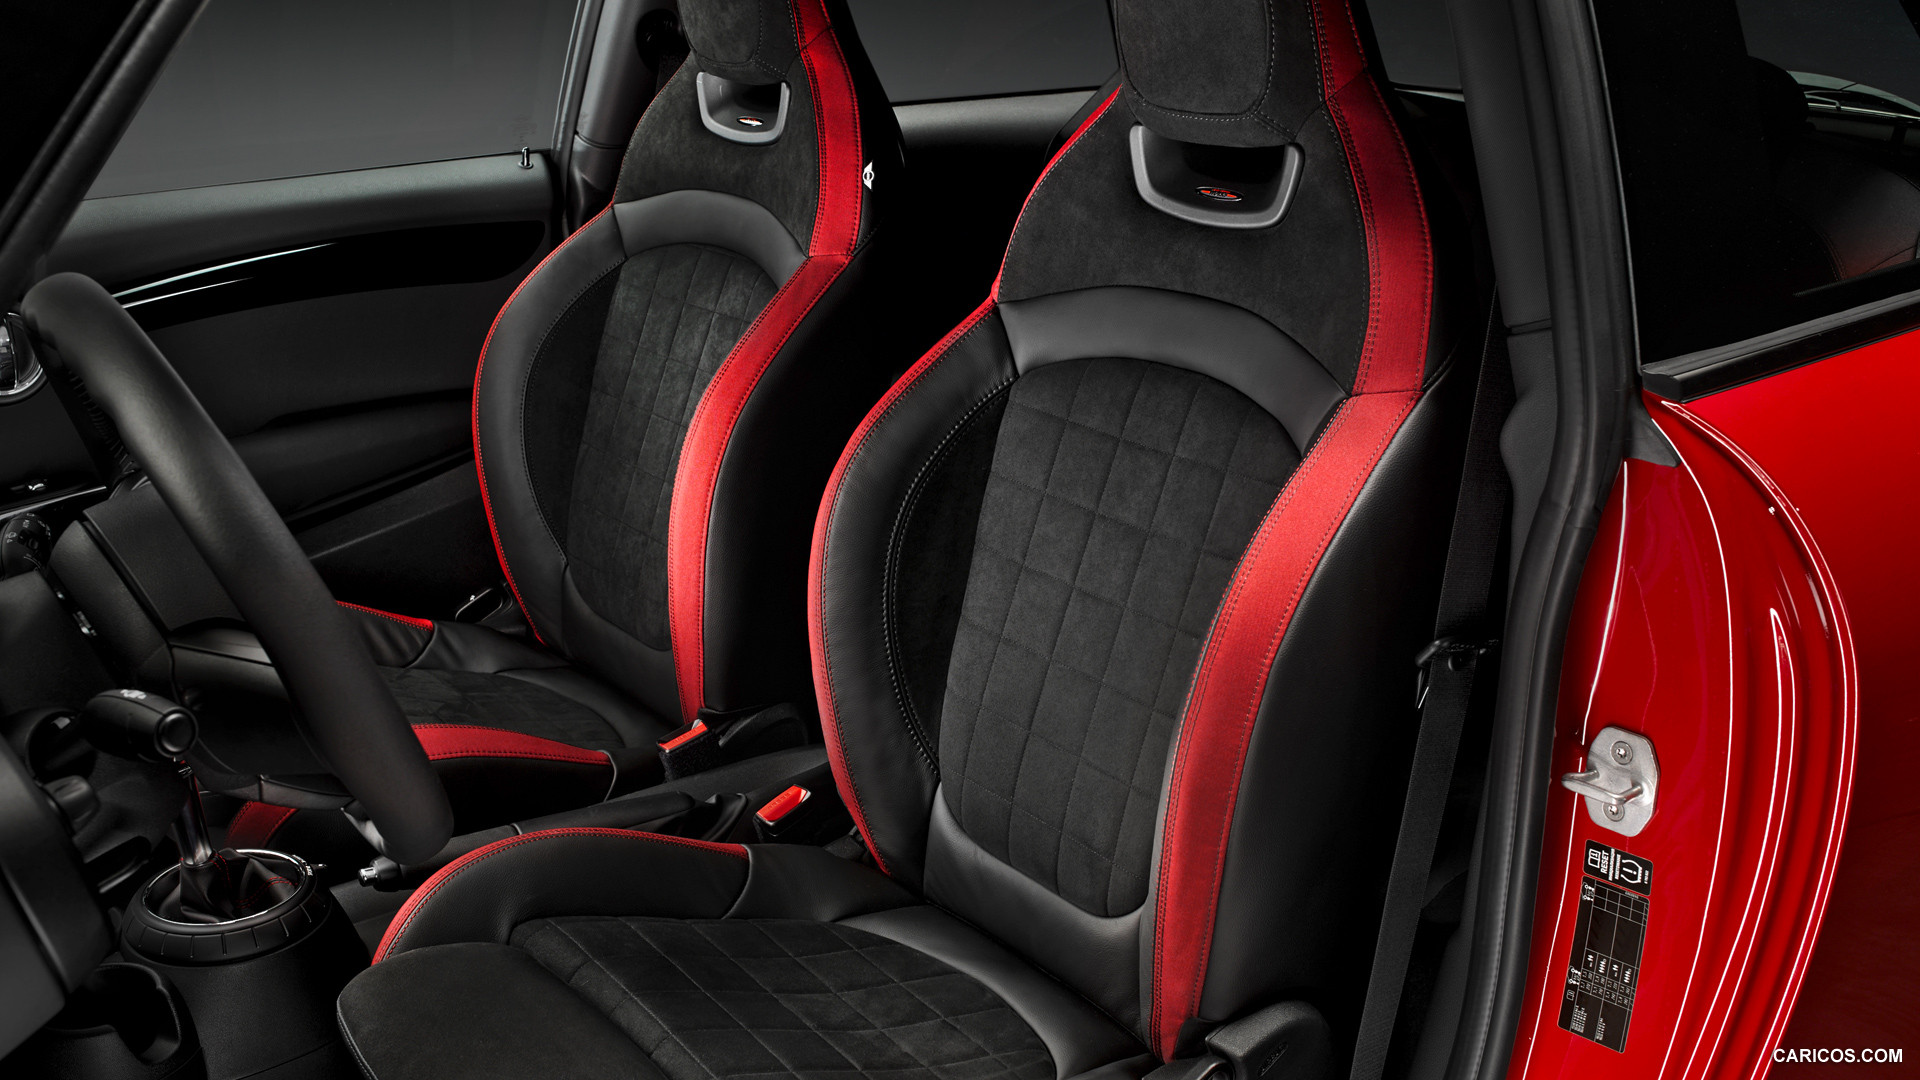 2015 MINI John Cooper Works  - Interior Rear Seats, #15 of 204